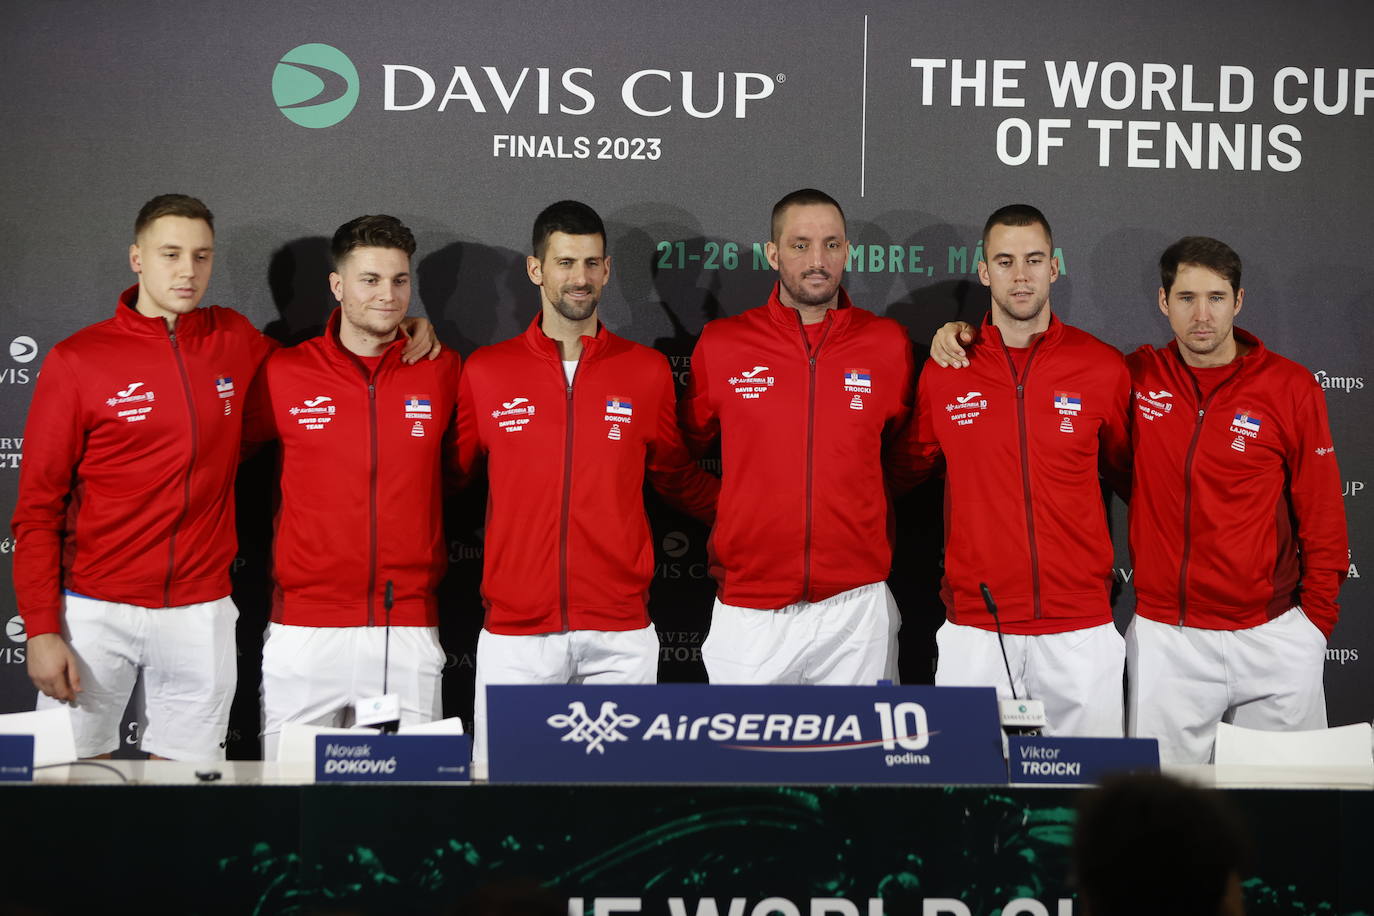 The Serbian team, with Medjedovic, Kecmanovic, Djokovic, Troicki (captain), Djere and Lajovic.